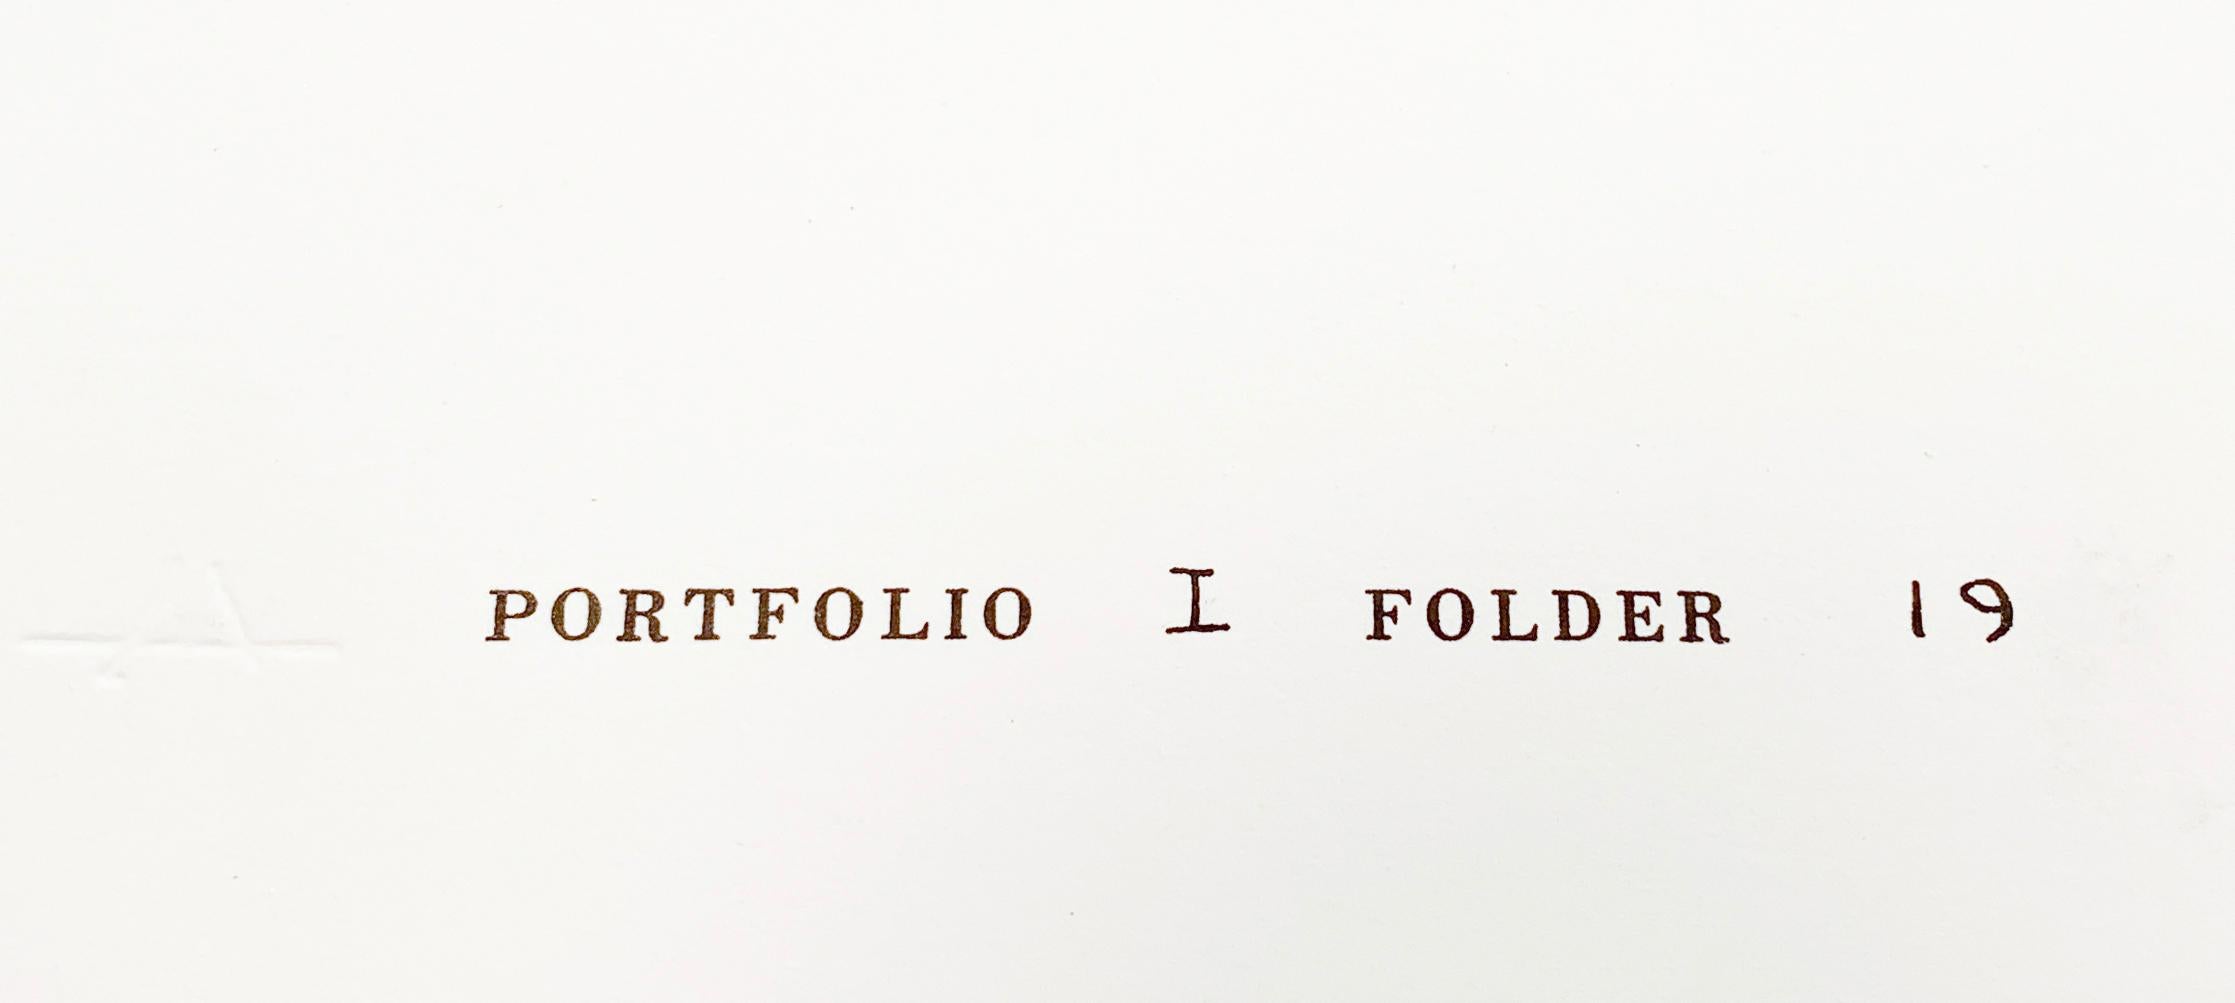 Formulation : Articulation Portfolio I Folder 19 (B) 3